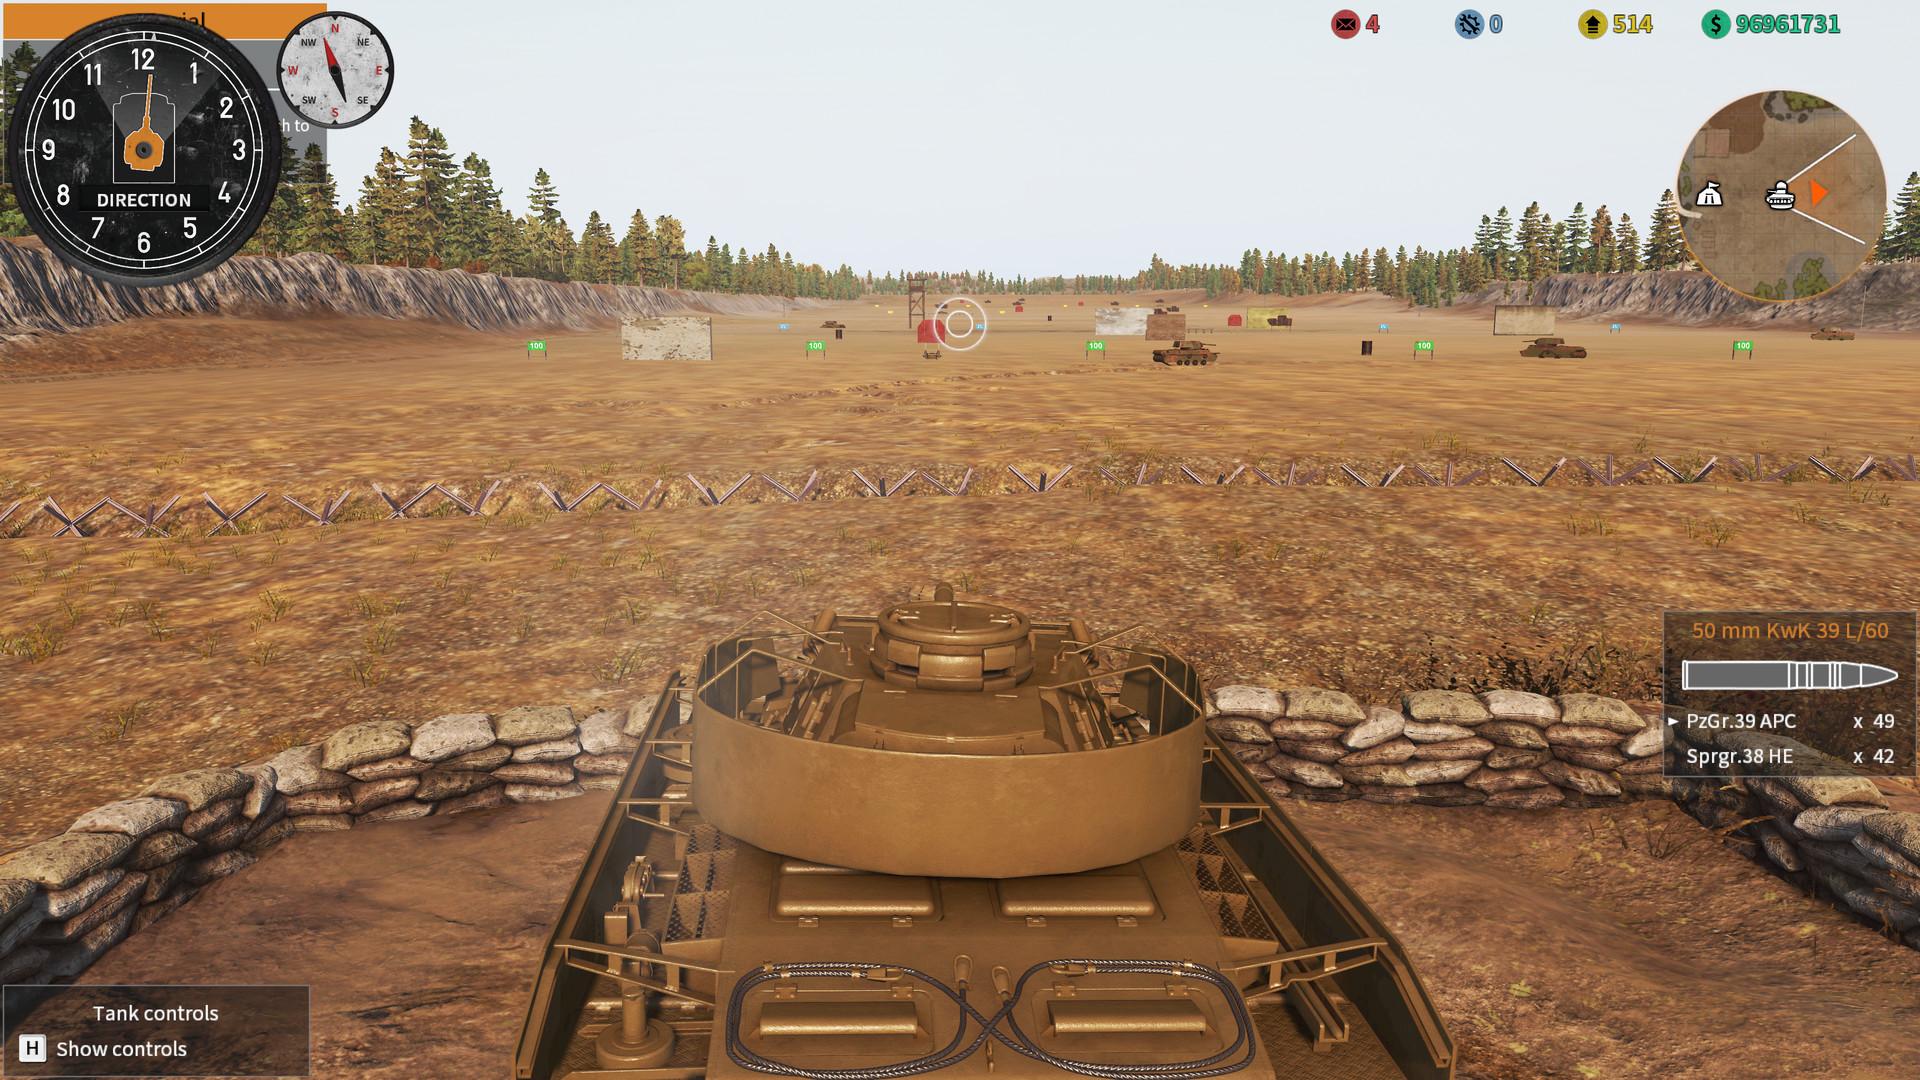 Screenshot №17 from game Tank Mechanic Simulator